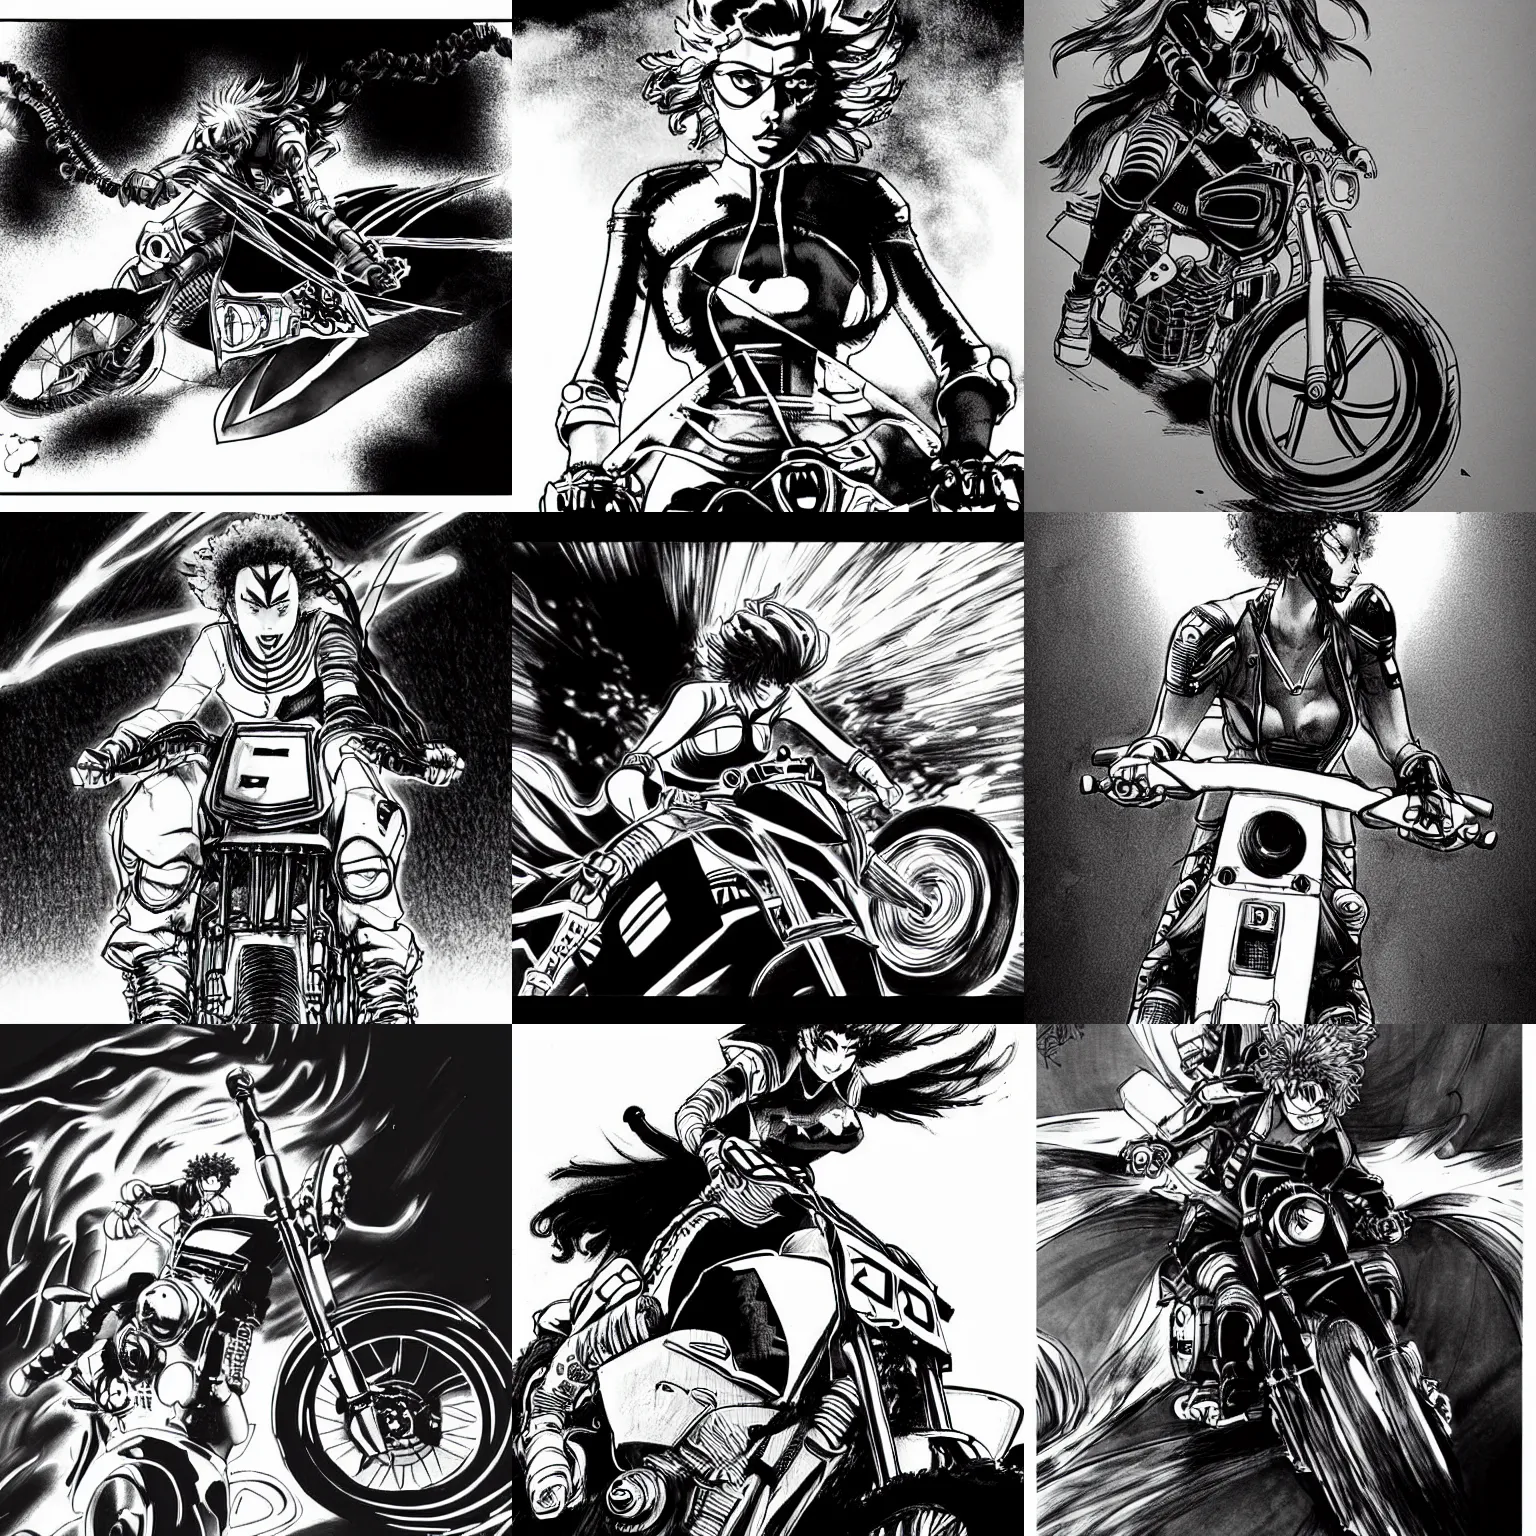 Prompt: angry scarlett johansson riding futuristic motorcross bike, afro samurai manga style, pencil and ink, dramatic lighting,